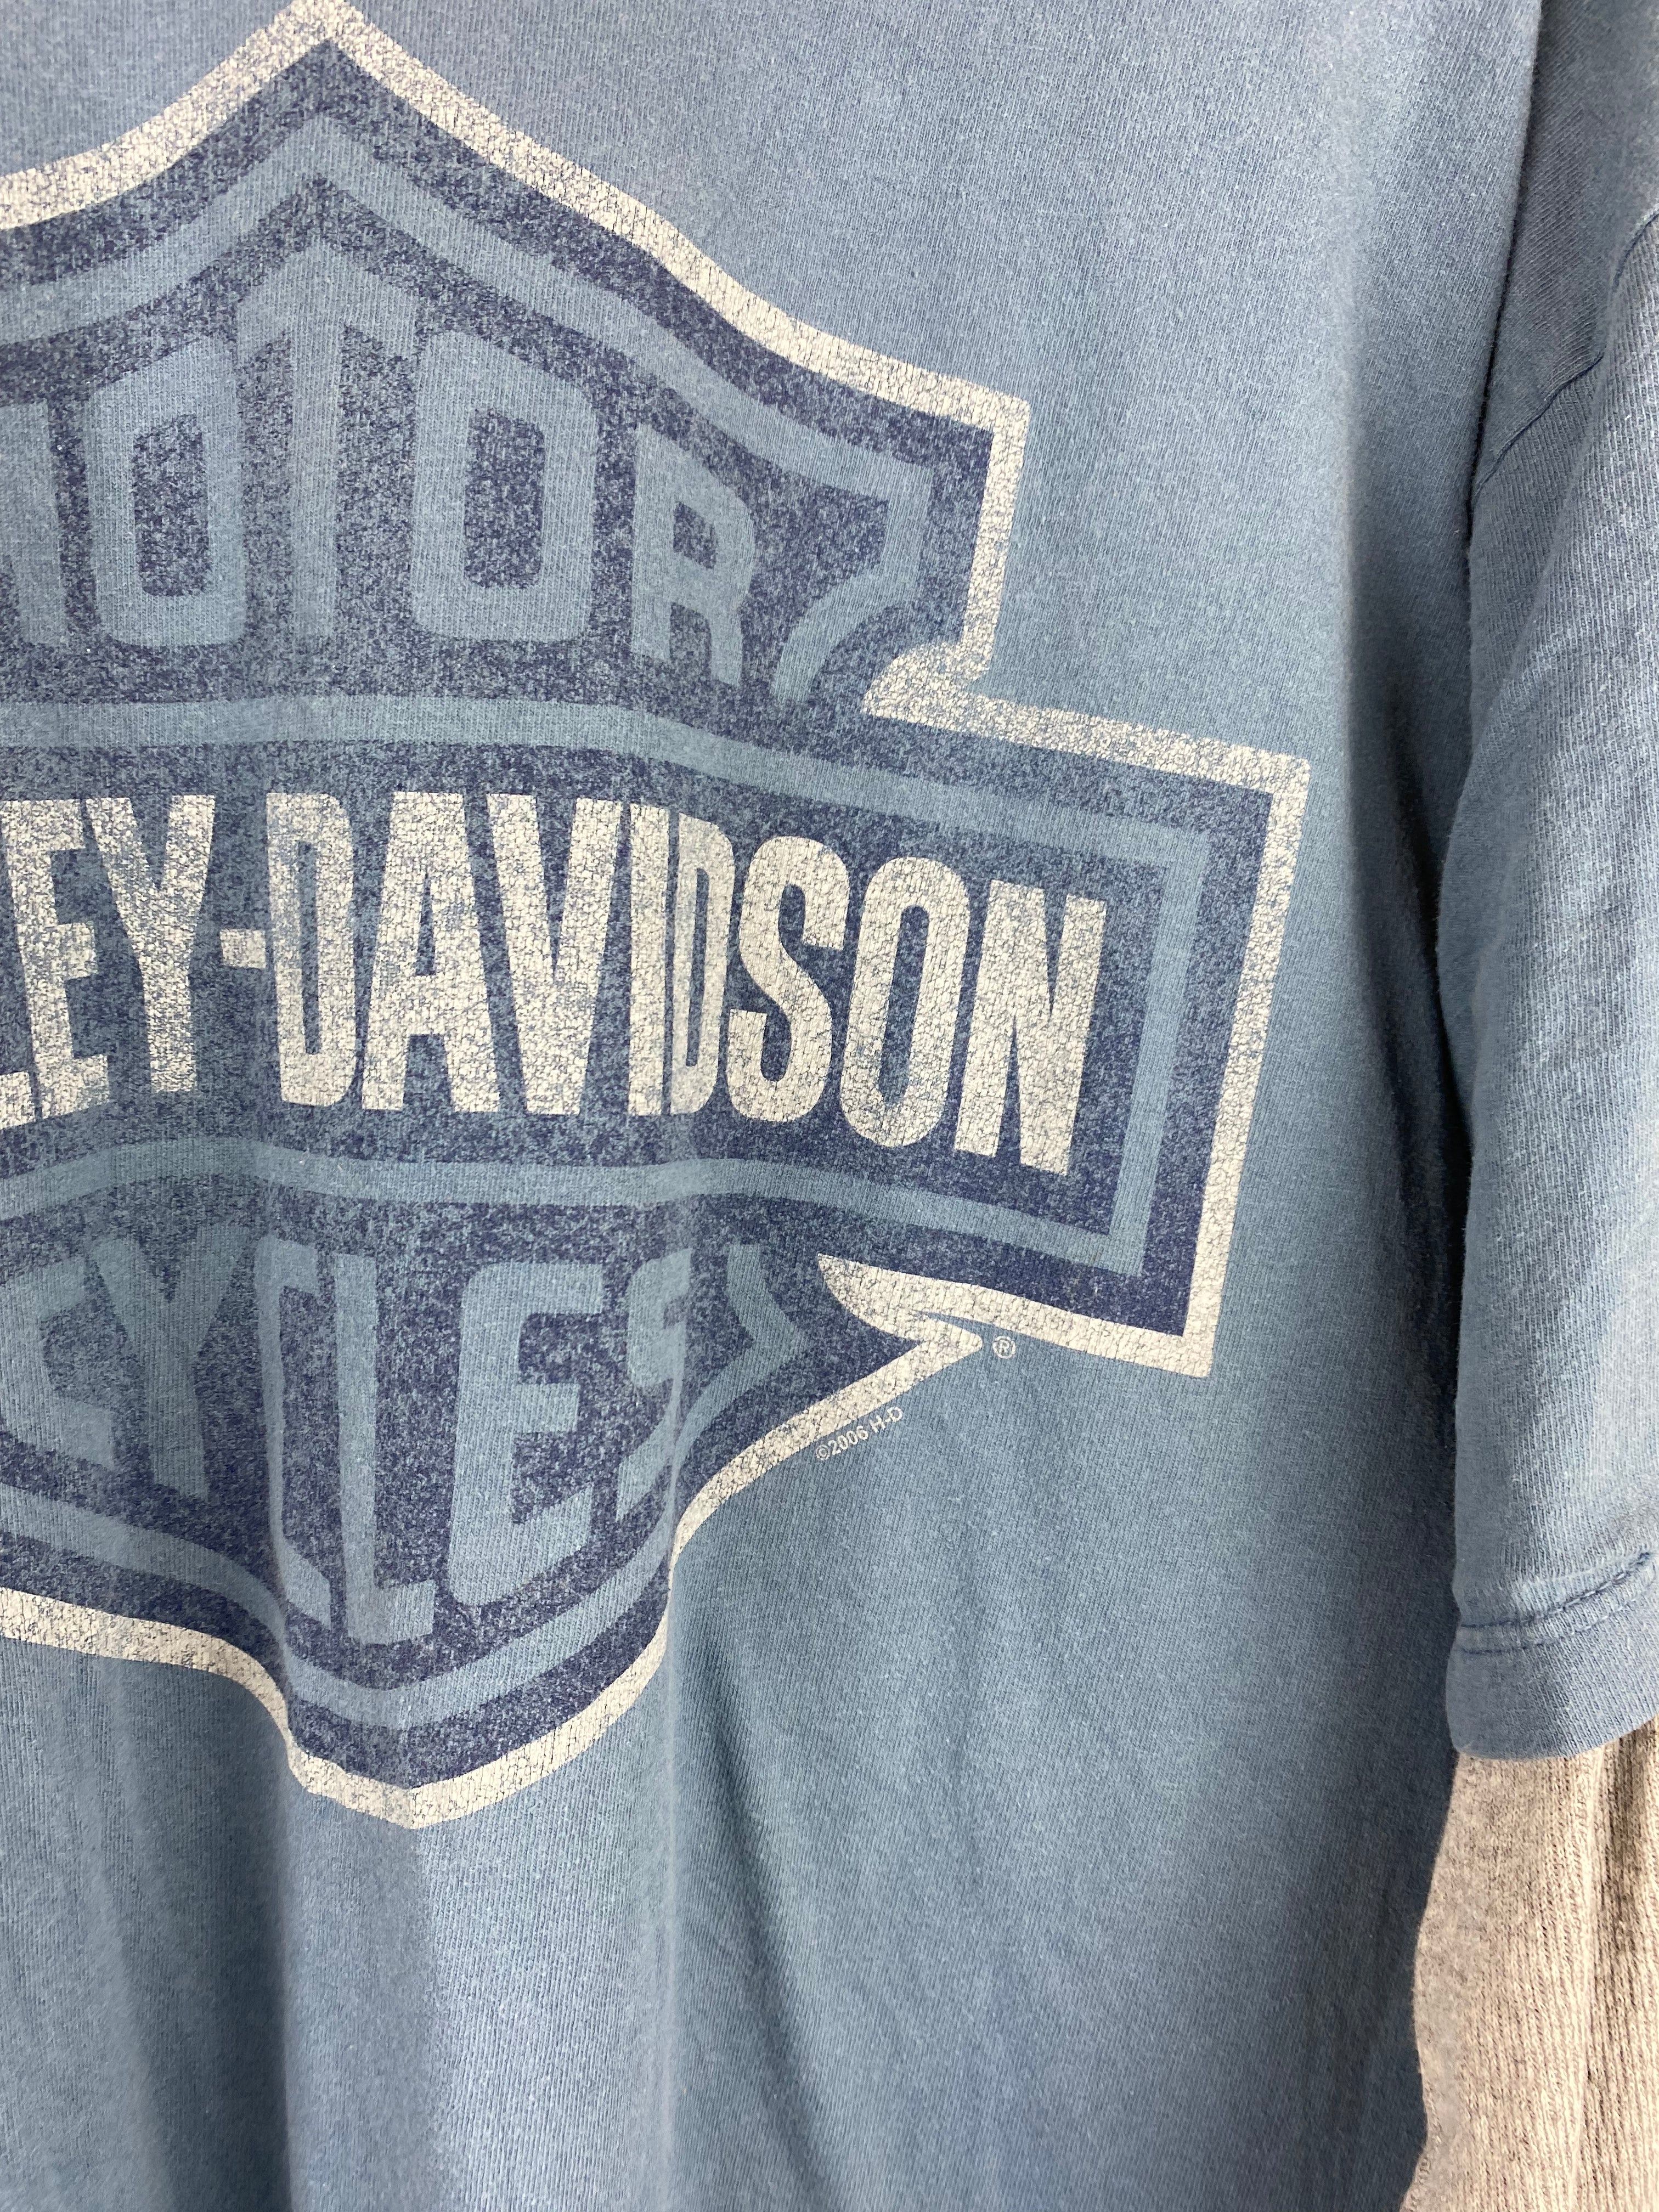 Vintage Harley Davidson “Indiana” long sleeve t-shirt